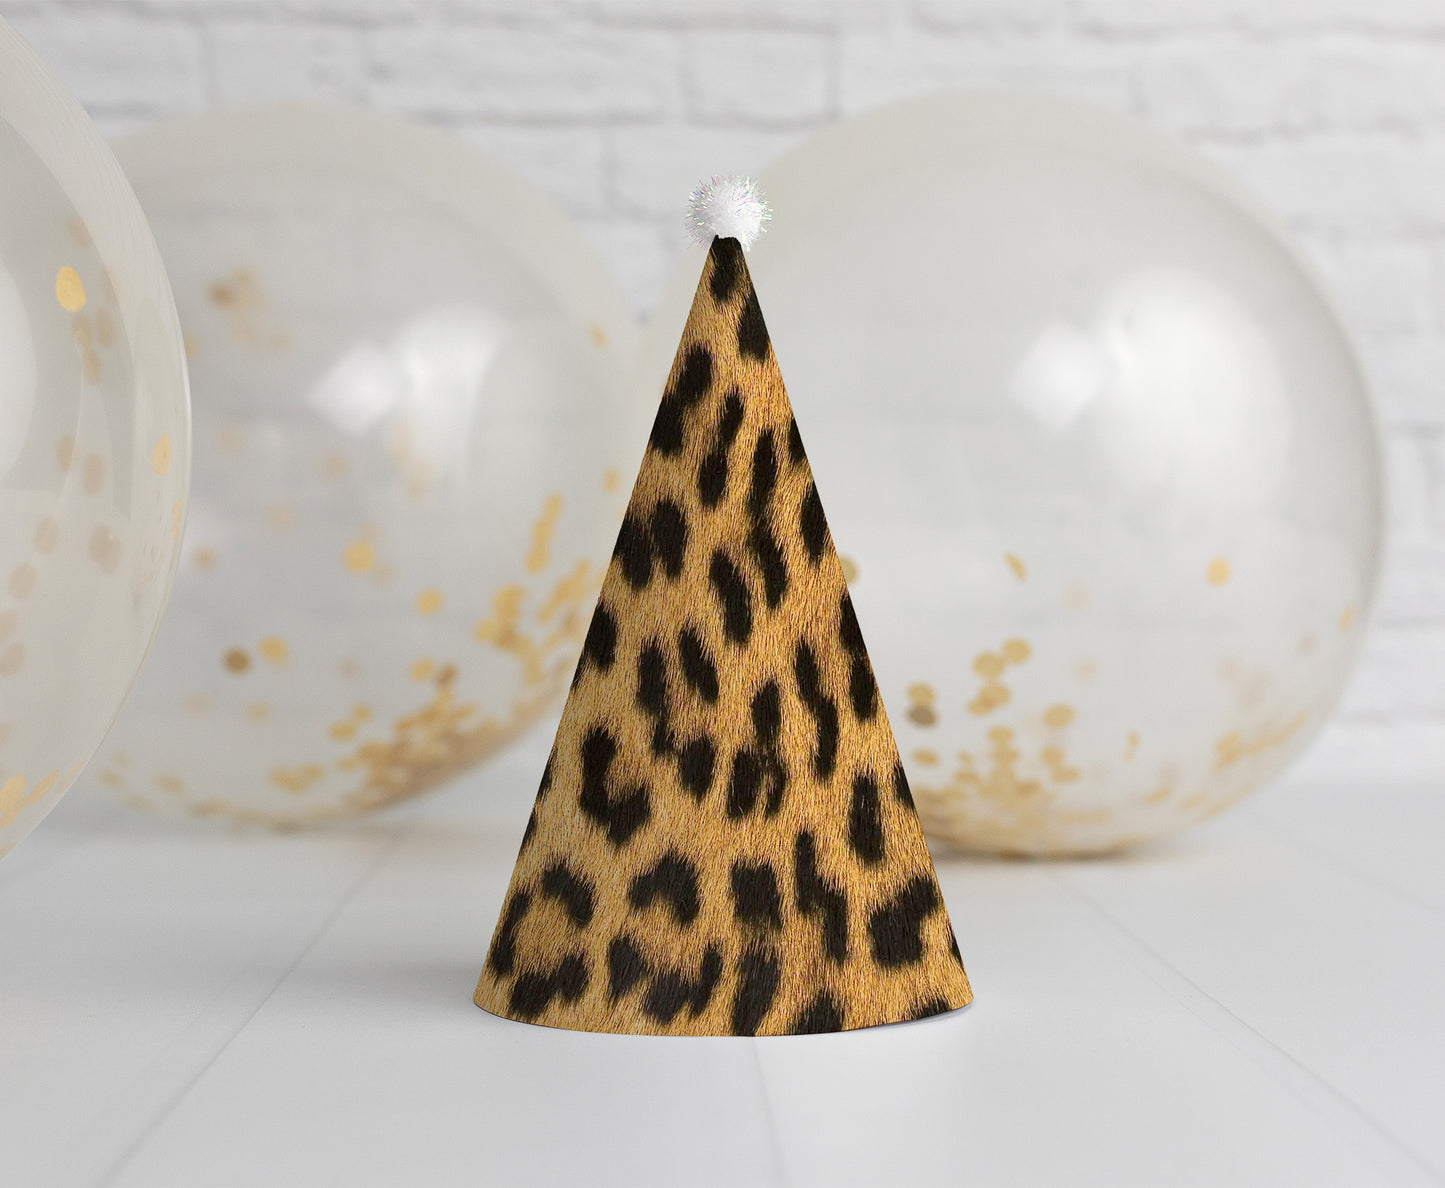 Animal print Party Hats | Safari Themed Birthday Party Decorations - 35H